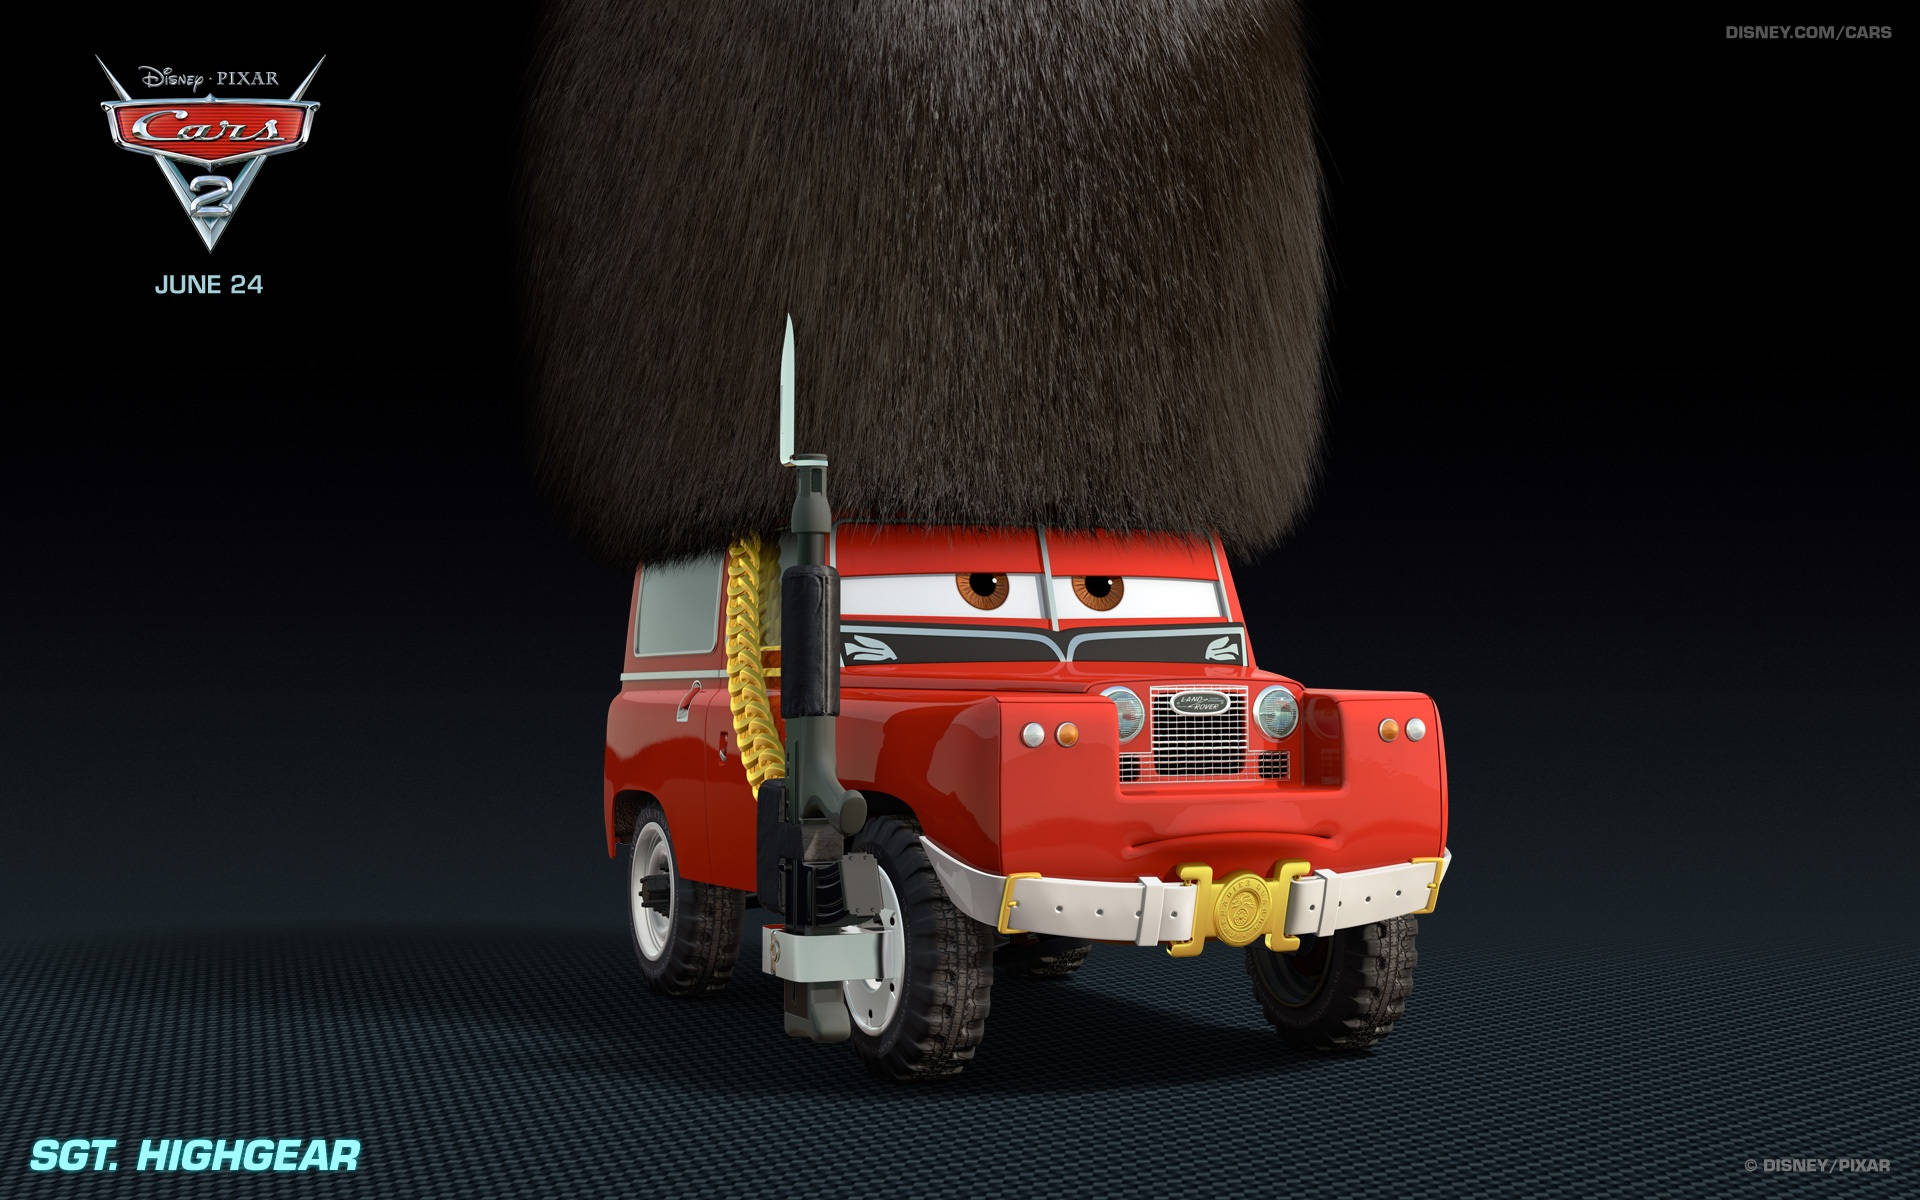 Disney Pixar Sgt. Highgear Cars 2 Picture